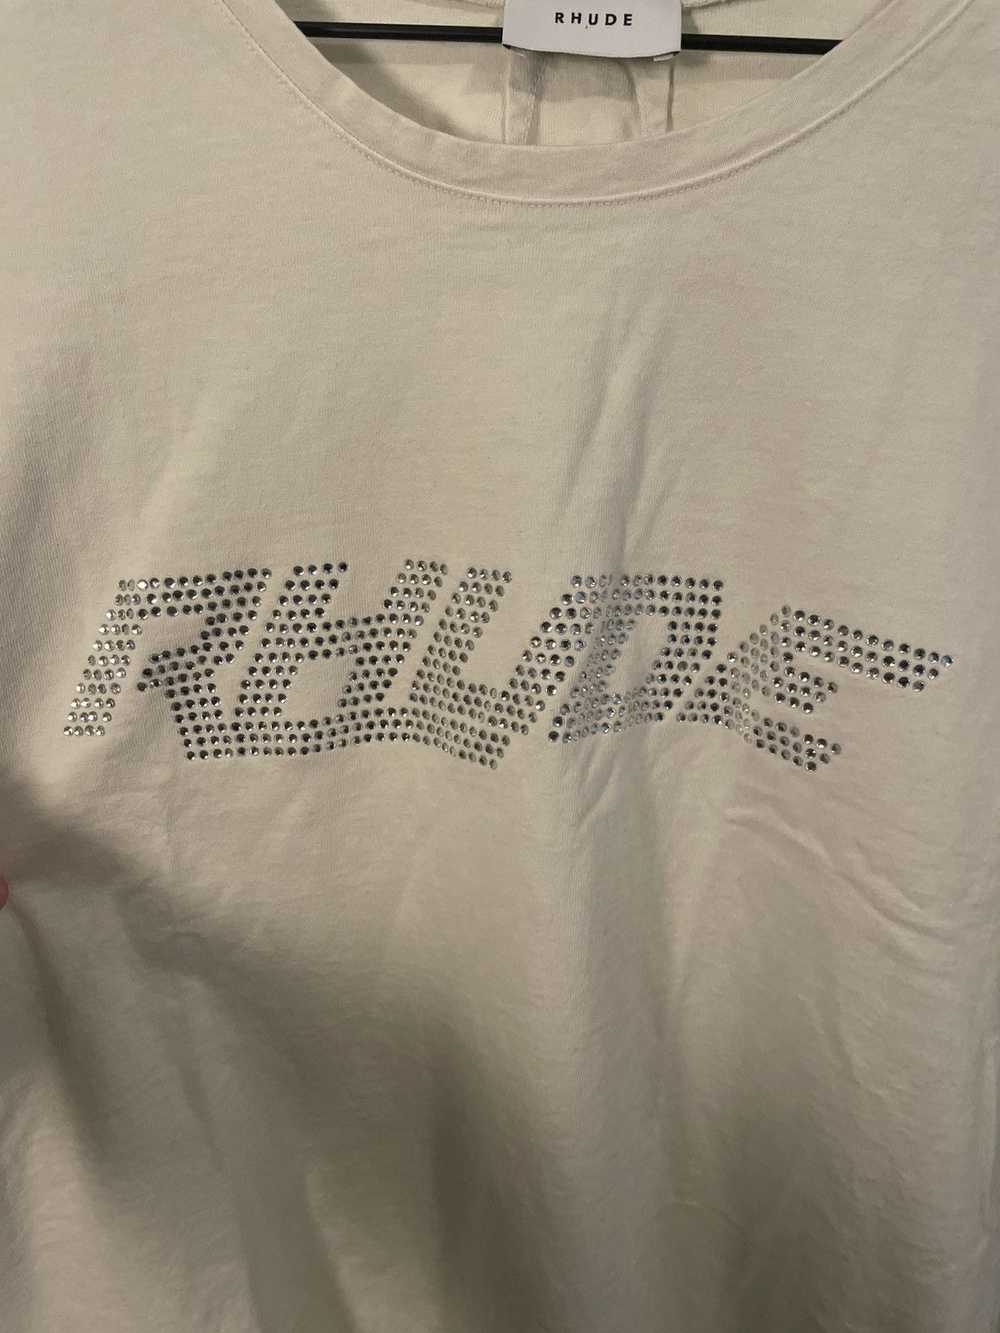 Rhude Rhude Rhinestone T-Shirt - image 7